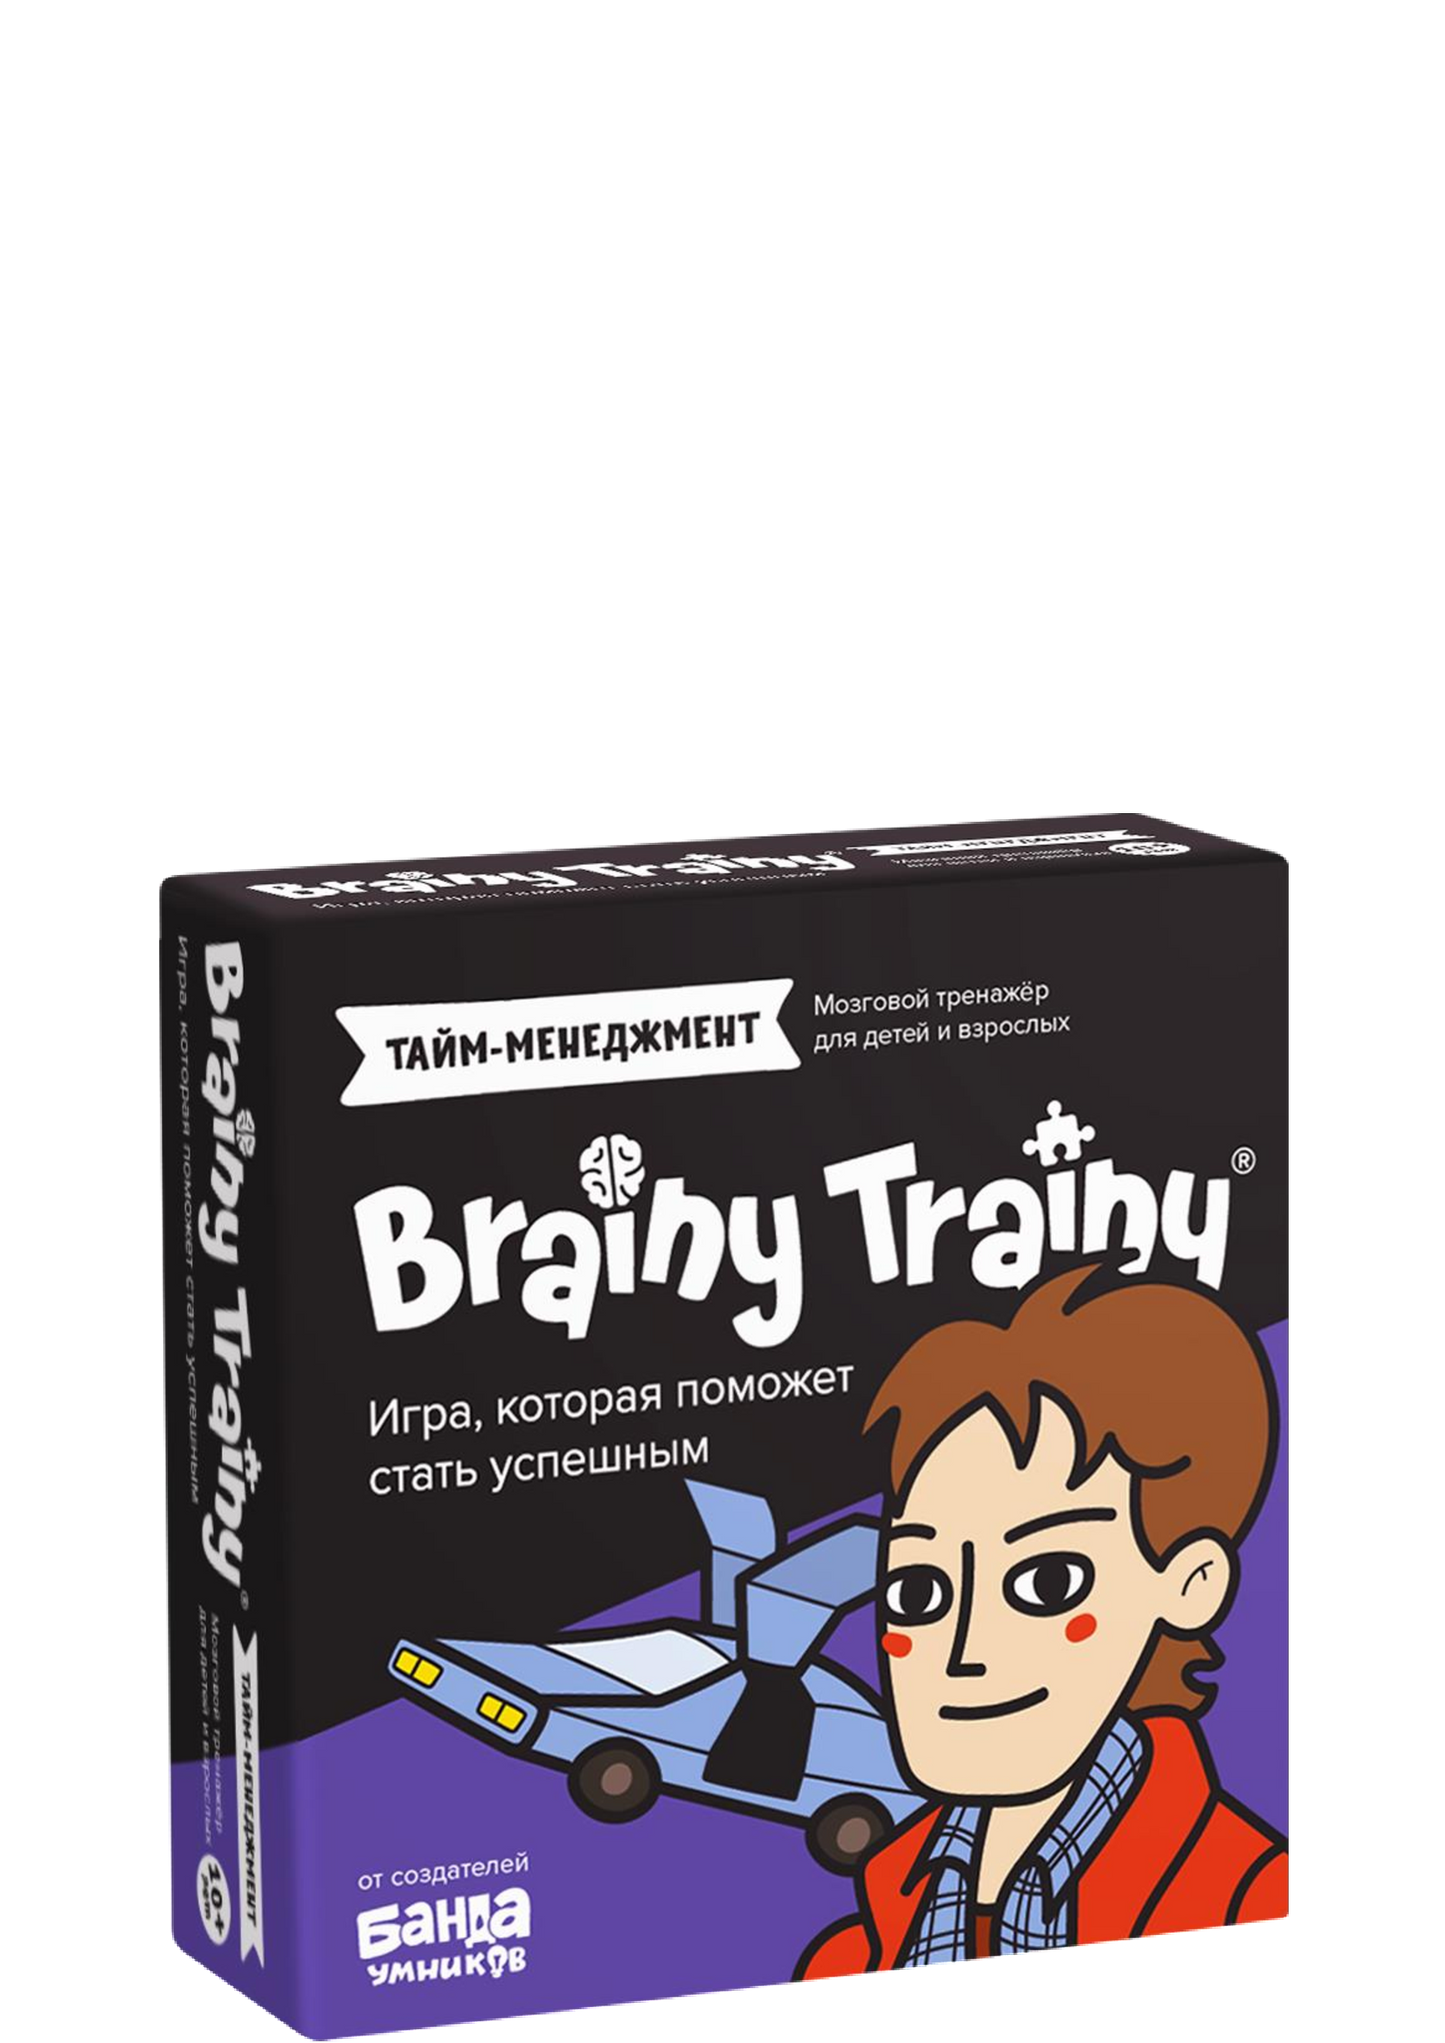 Brainy Trainy «Тайм-менеджмент»